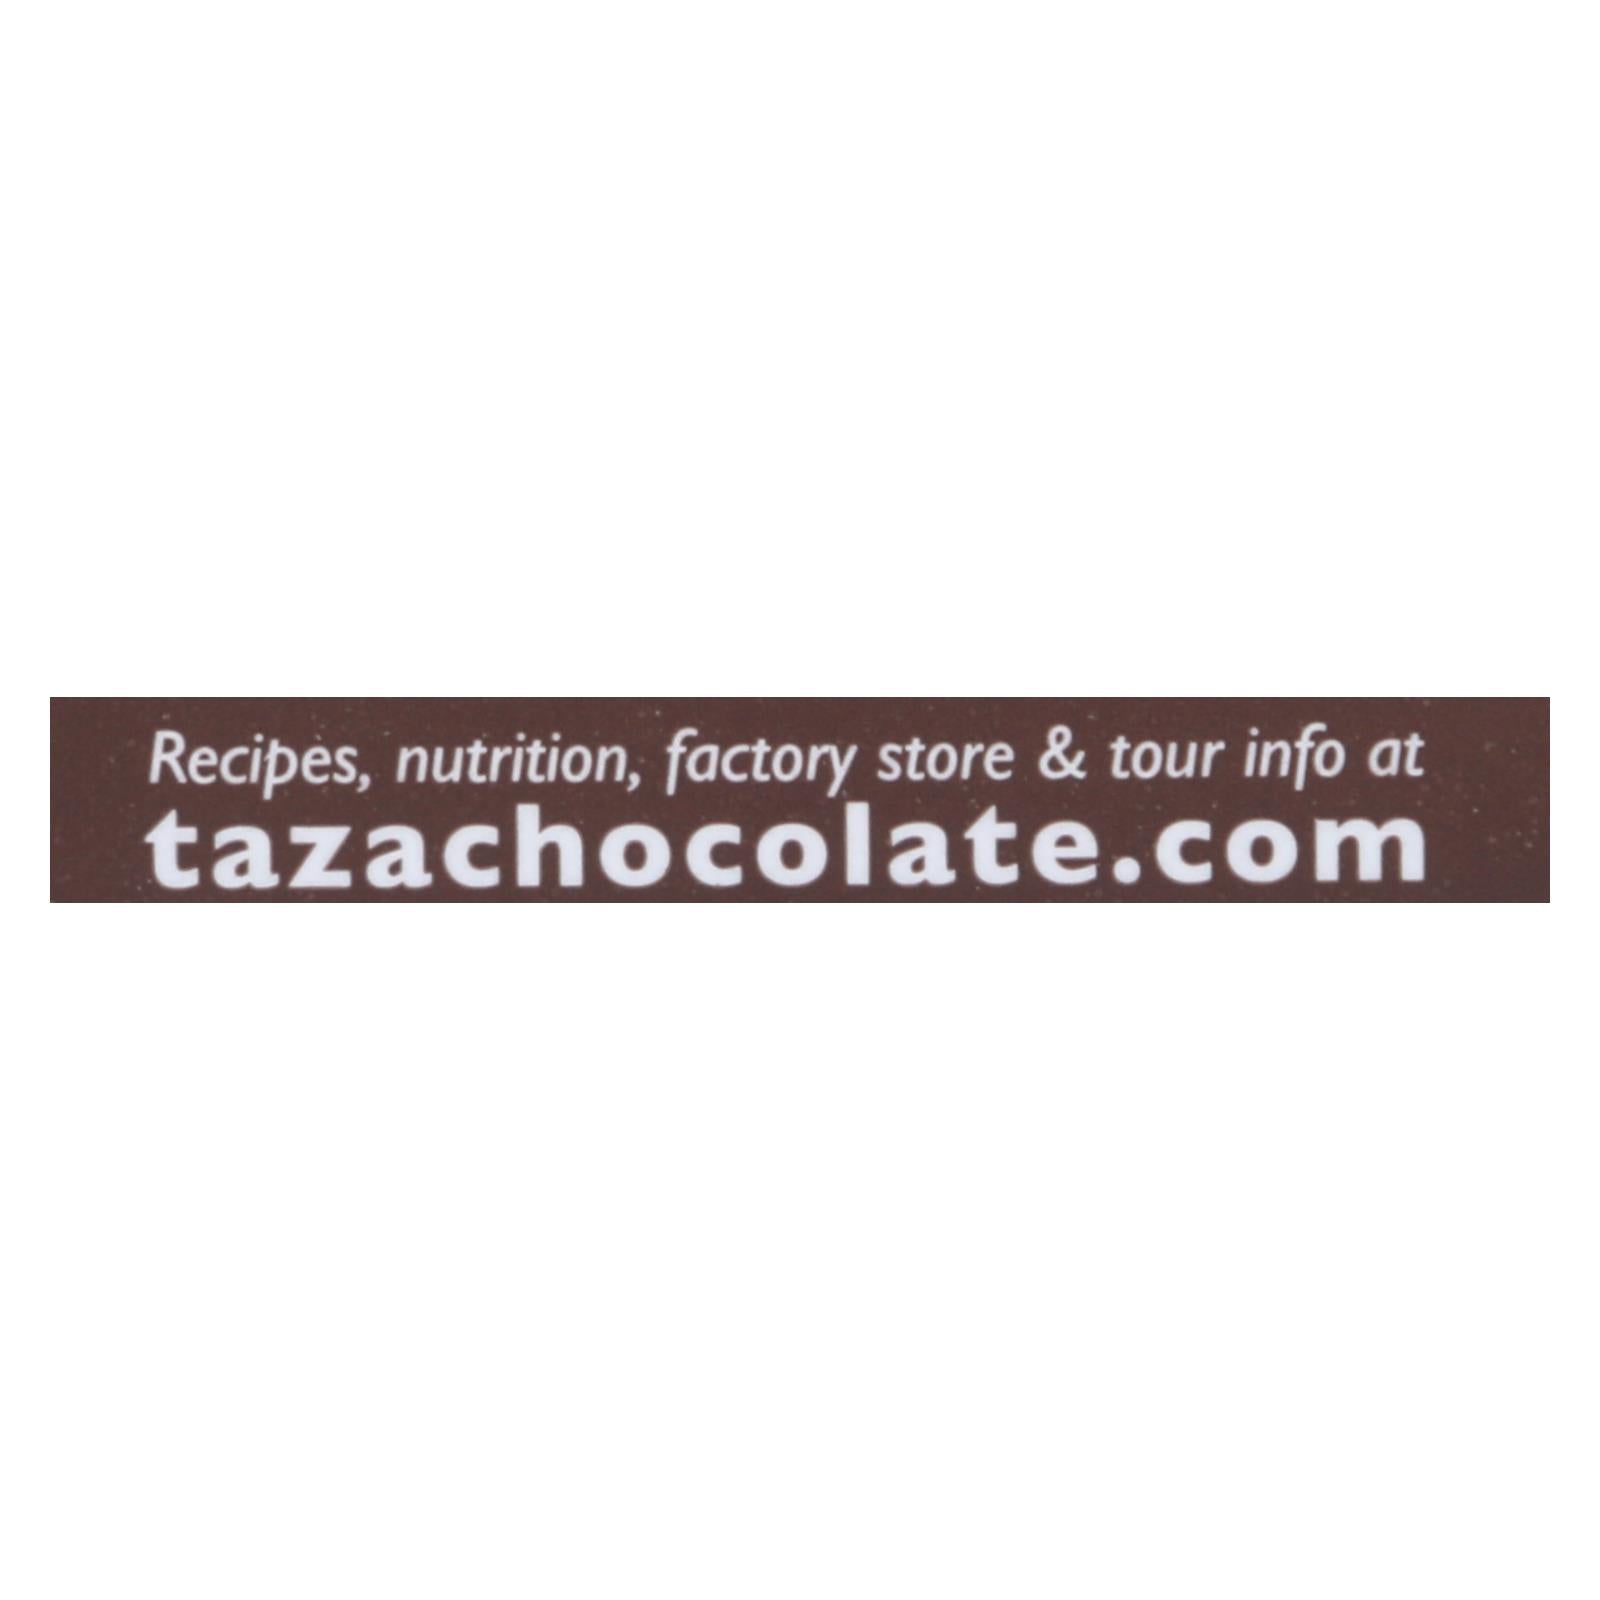 Taza Chocolate - Chocolate Disk Spk Eggnog - Case of 12 - 2.7 OZ